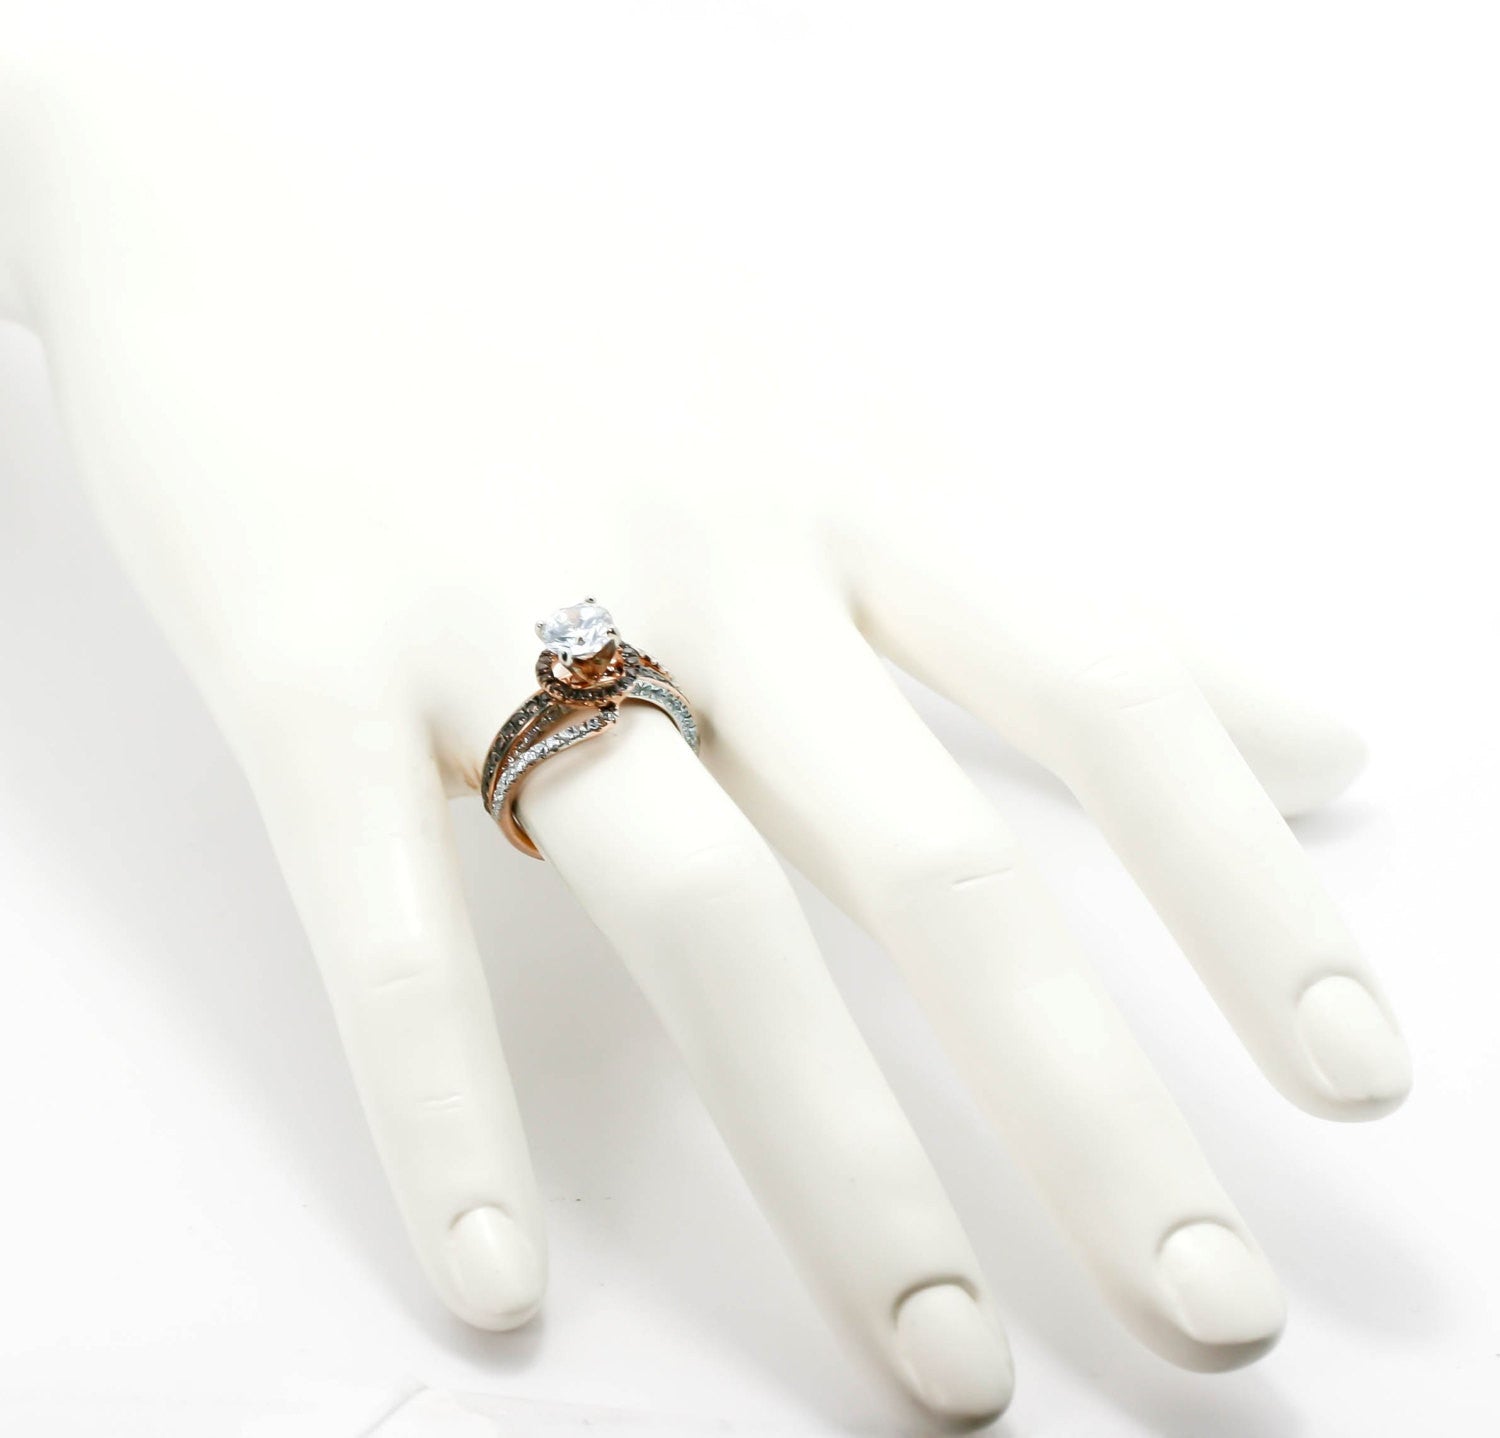 Unique Floating Halo Rose Gold Diamond, 1 Carat Forever Brilliant Moissanite, Brown Diamonds Engagement Ring, Anniversary - FB94619